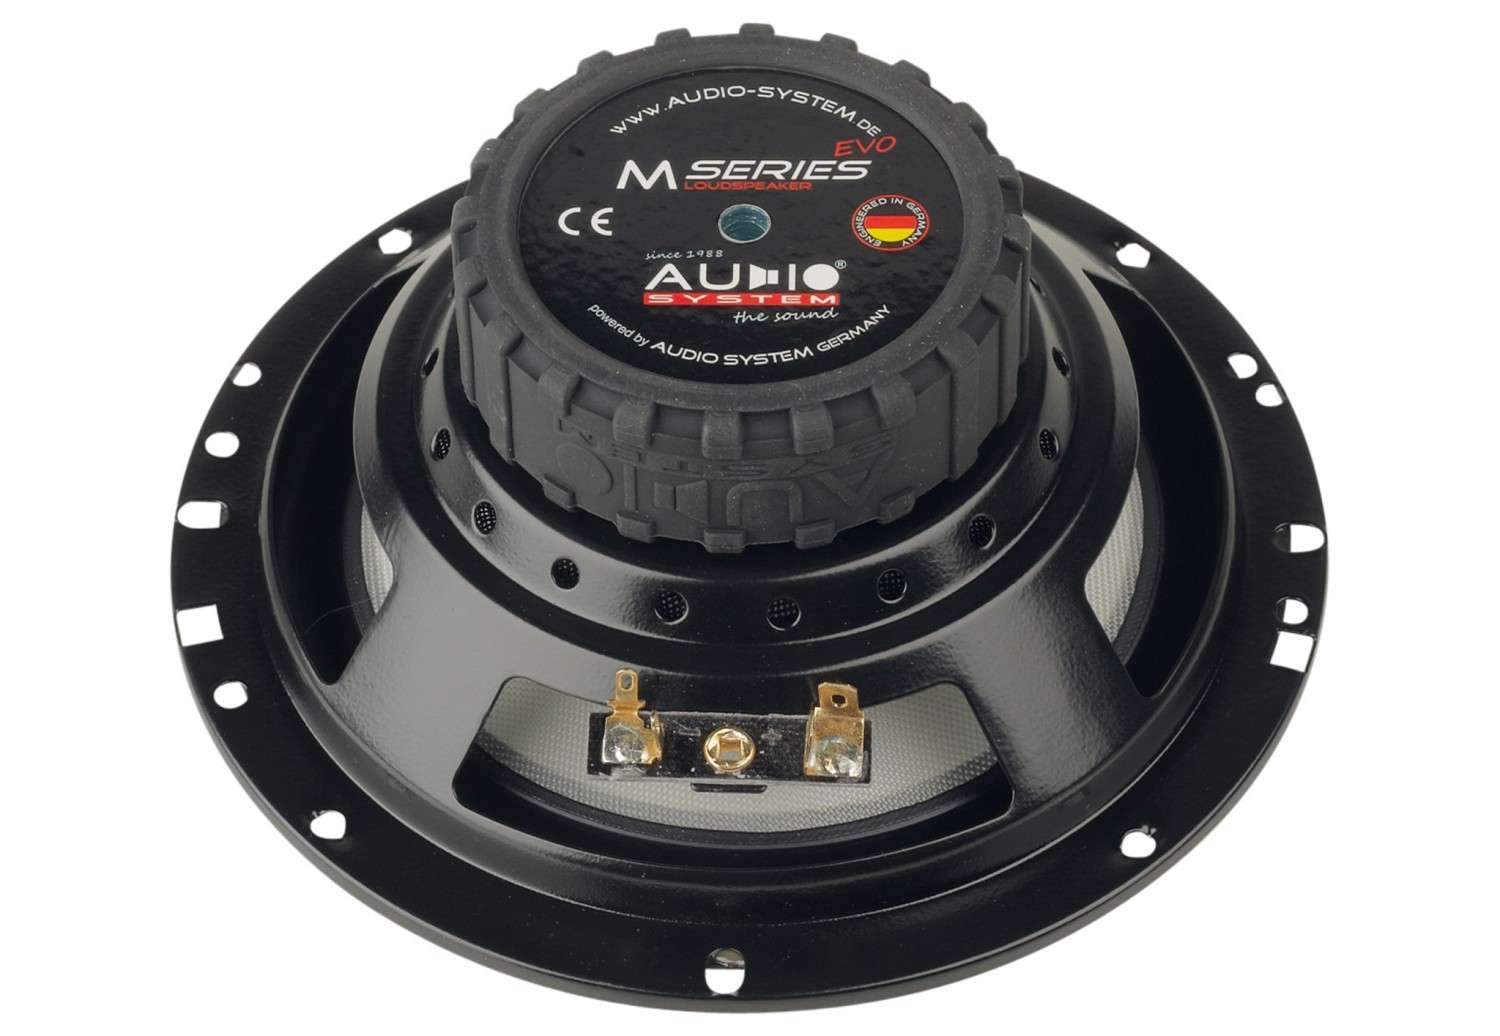 Car-HiFi-Lautsprecher 13cm Audio System CO 130 Evo, Audio System M 165 Evo im Test , Bild 2